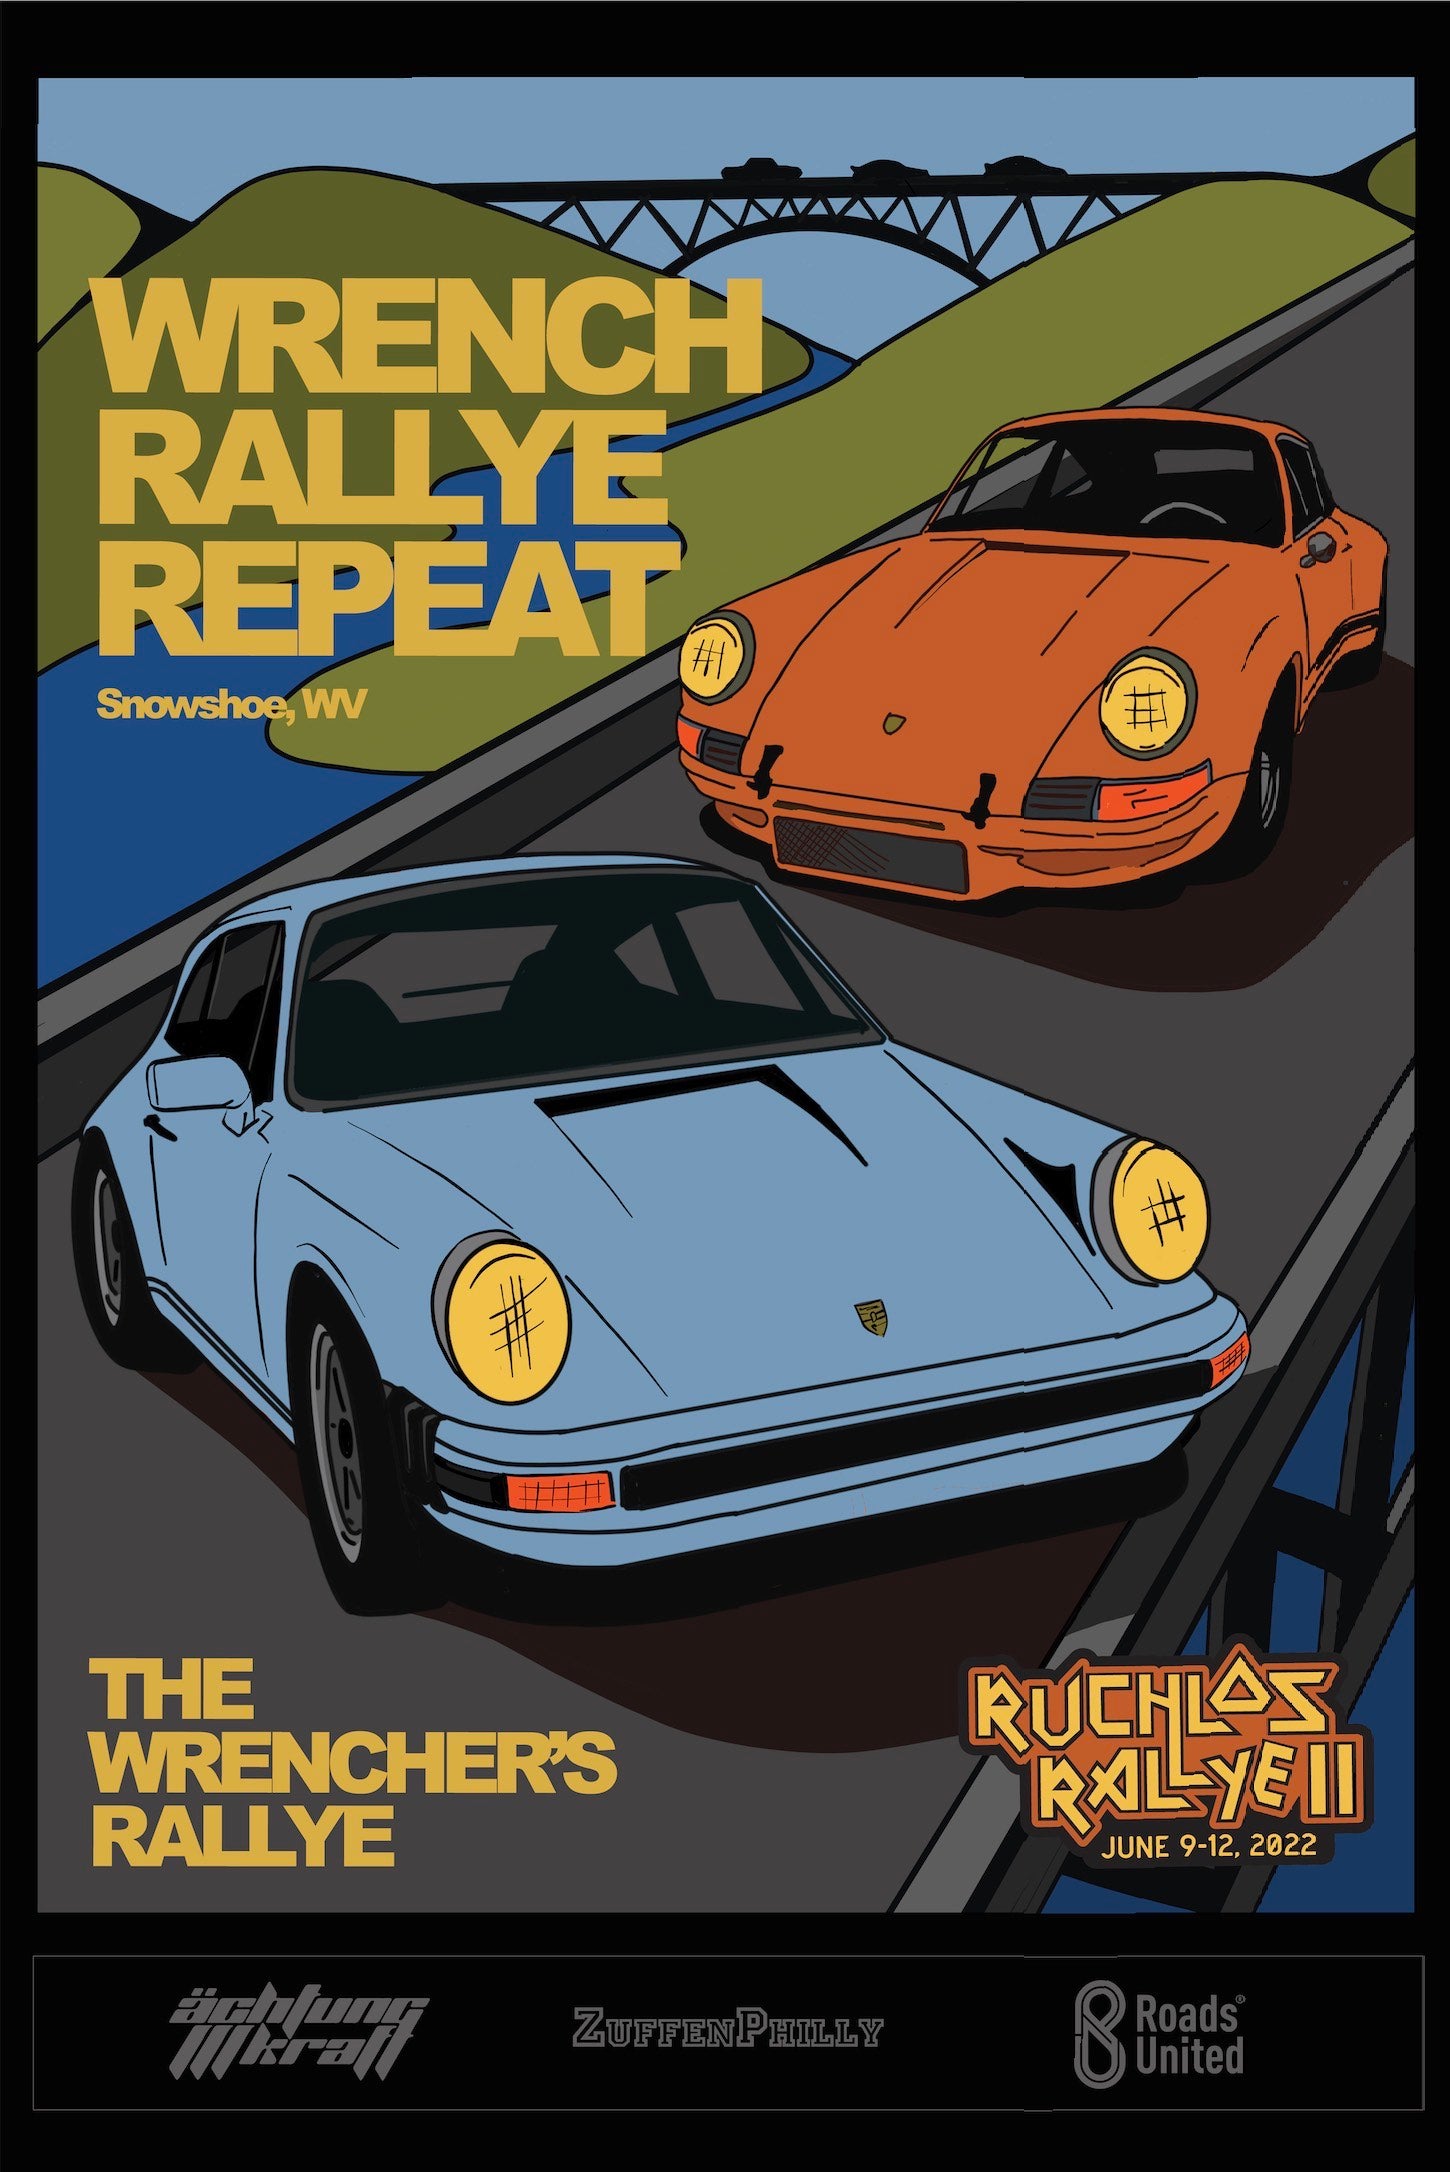 Ruchlos Rallye II - 2022 Event Poster